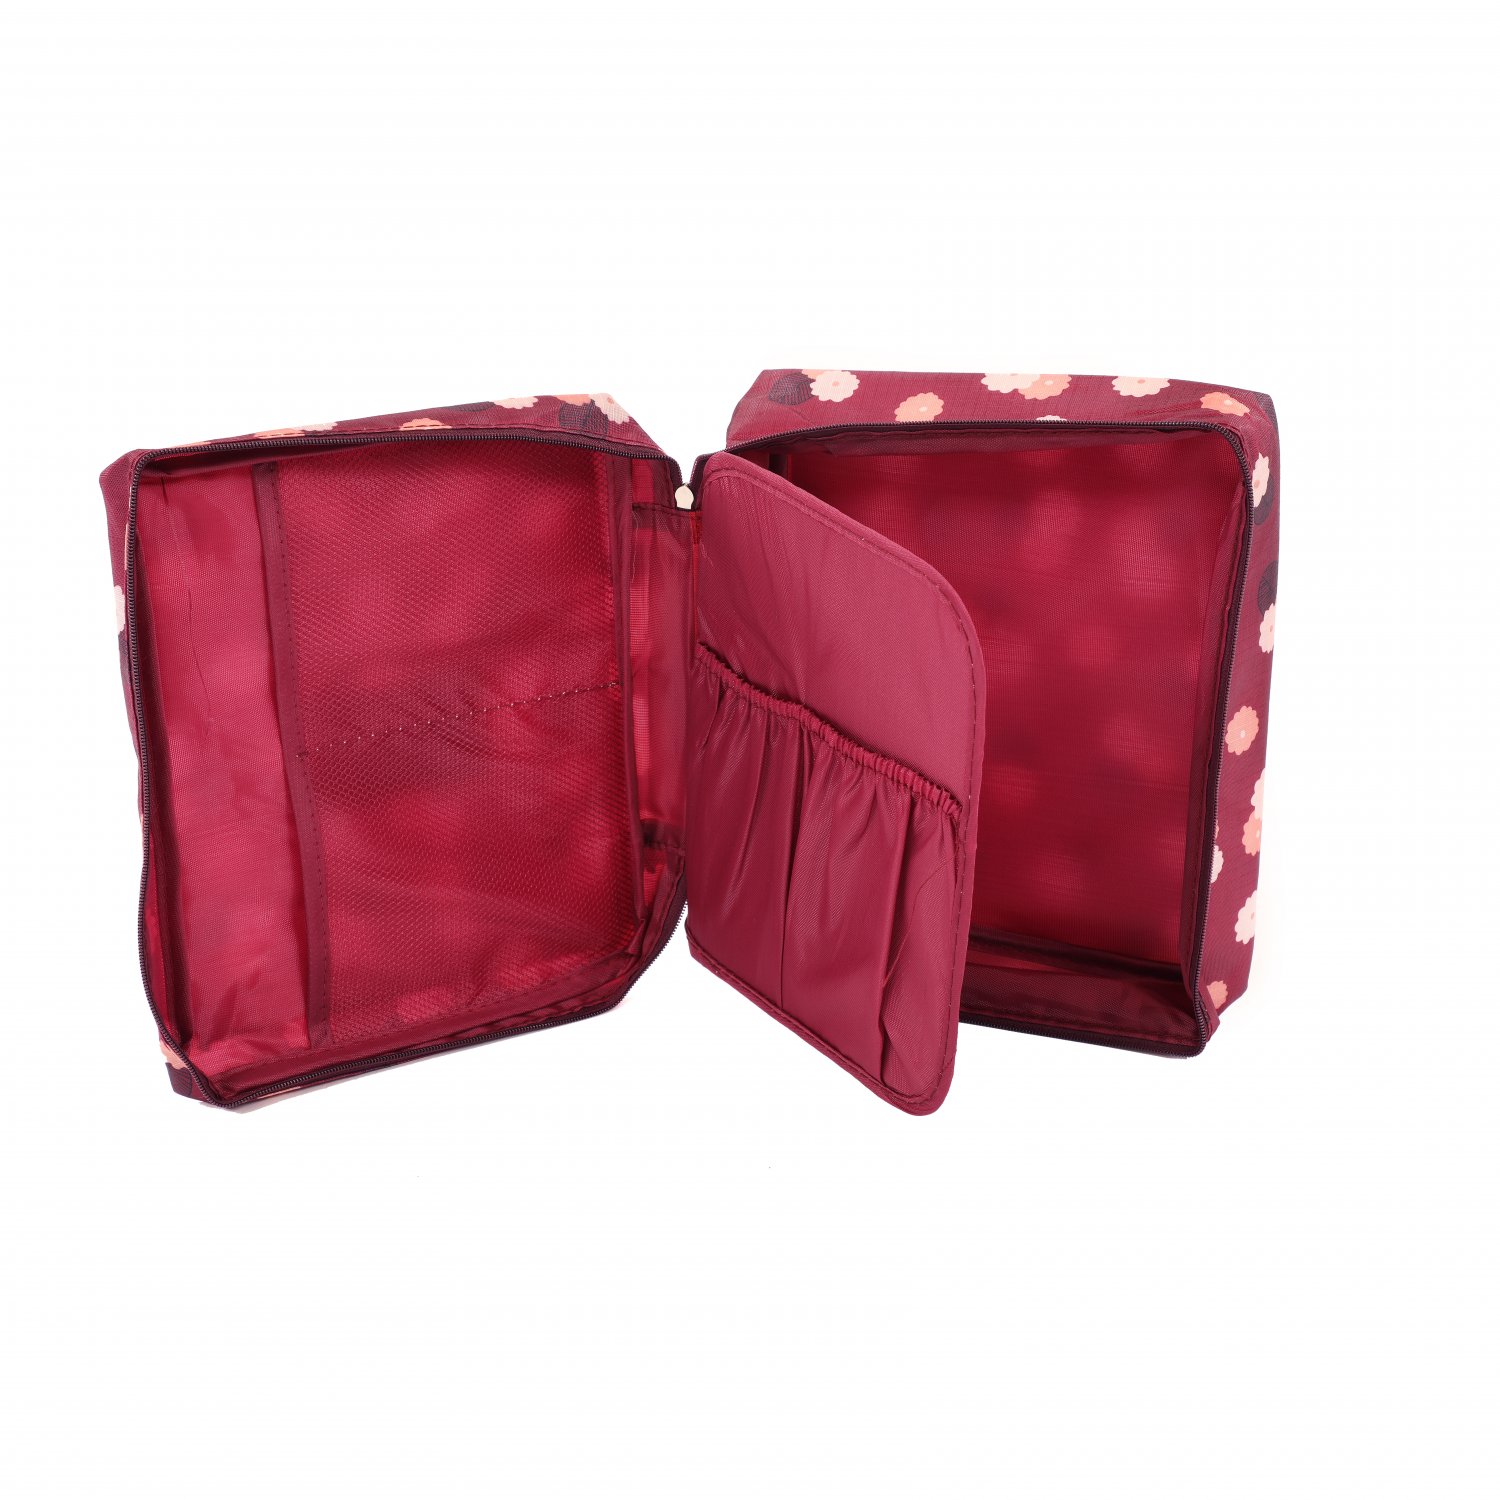 Oypla | Make-Up Travel Bag - Red | Shop Online Today